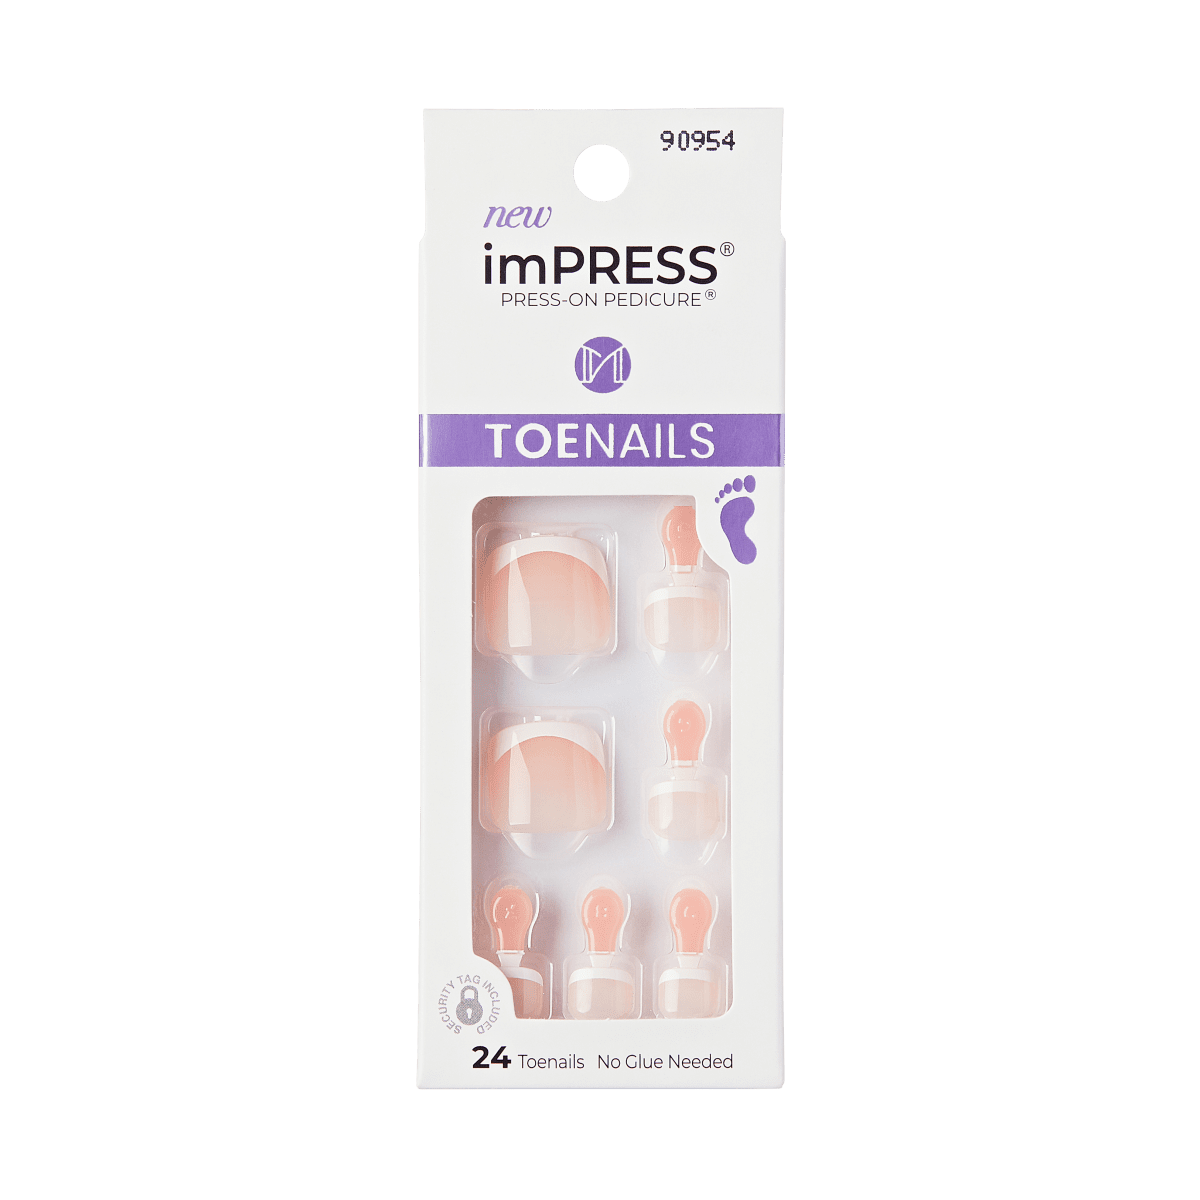 imPRESS Press-On Pedicure - Renaissance